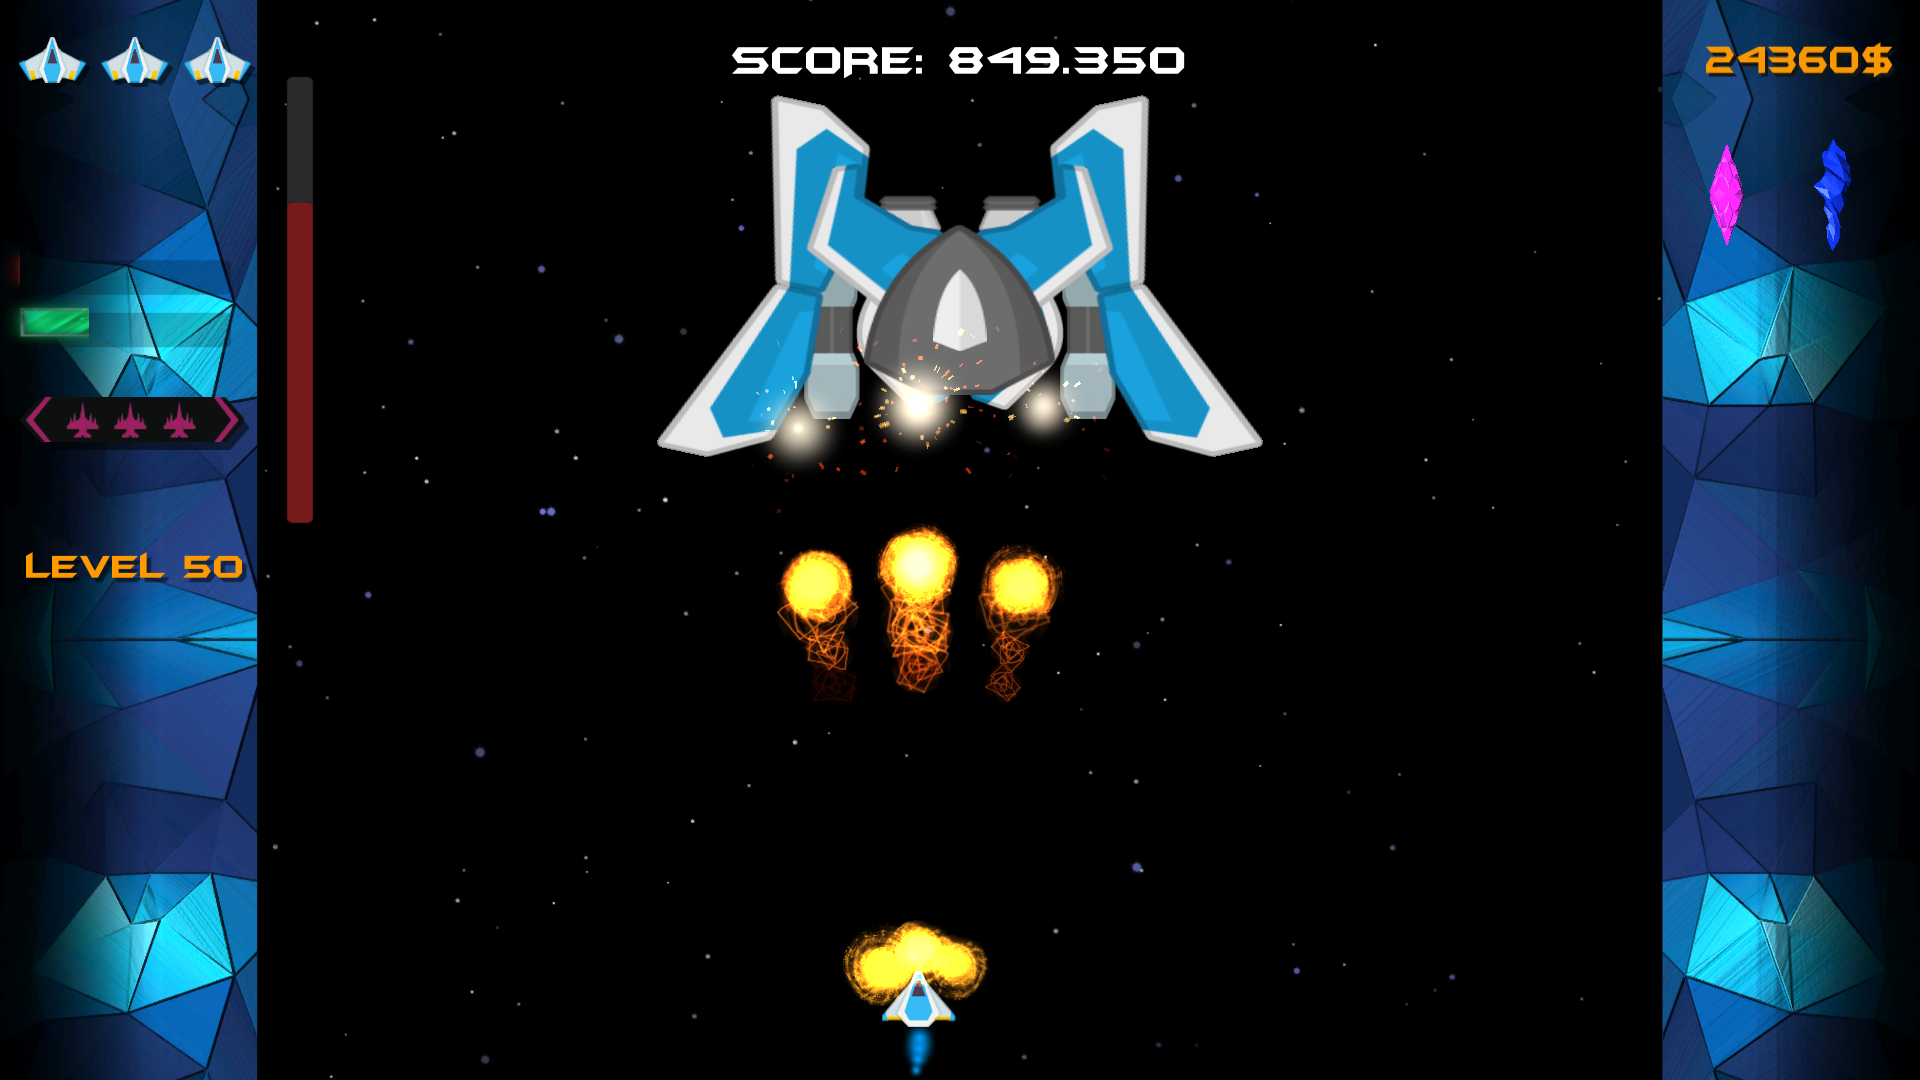 Warspace space game screenshot